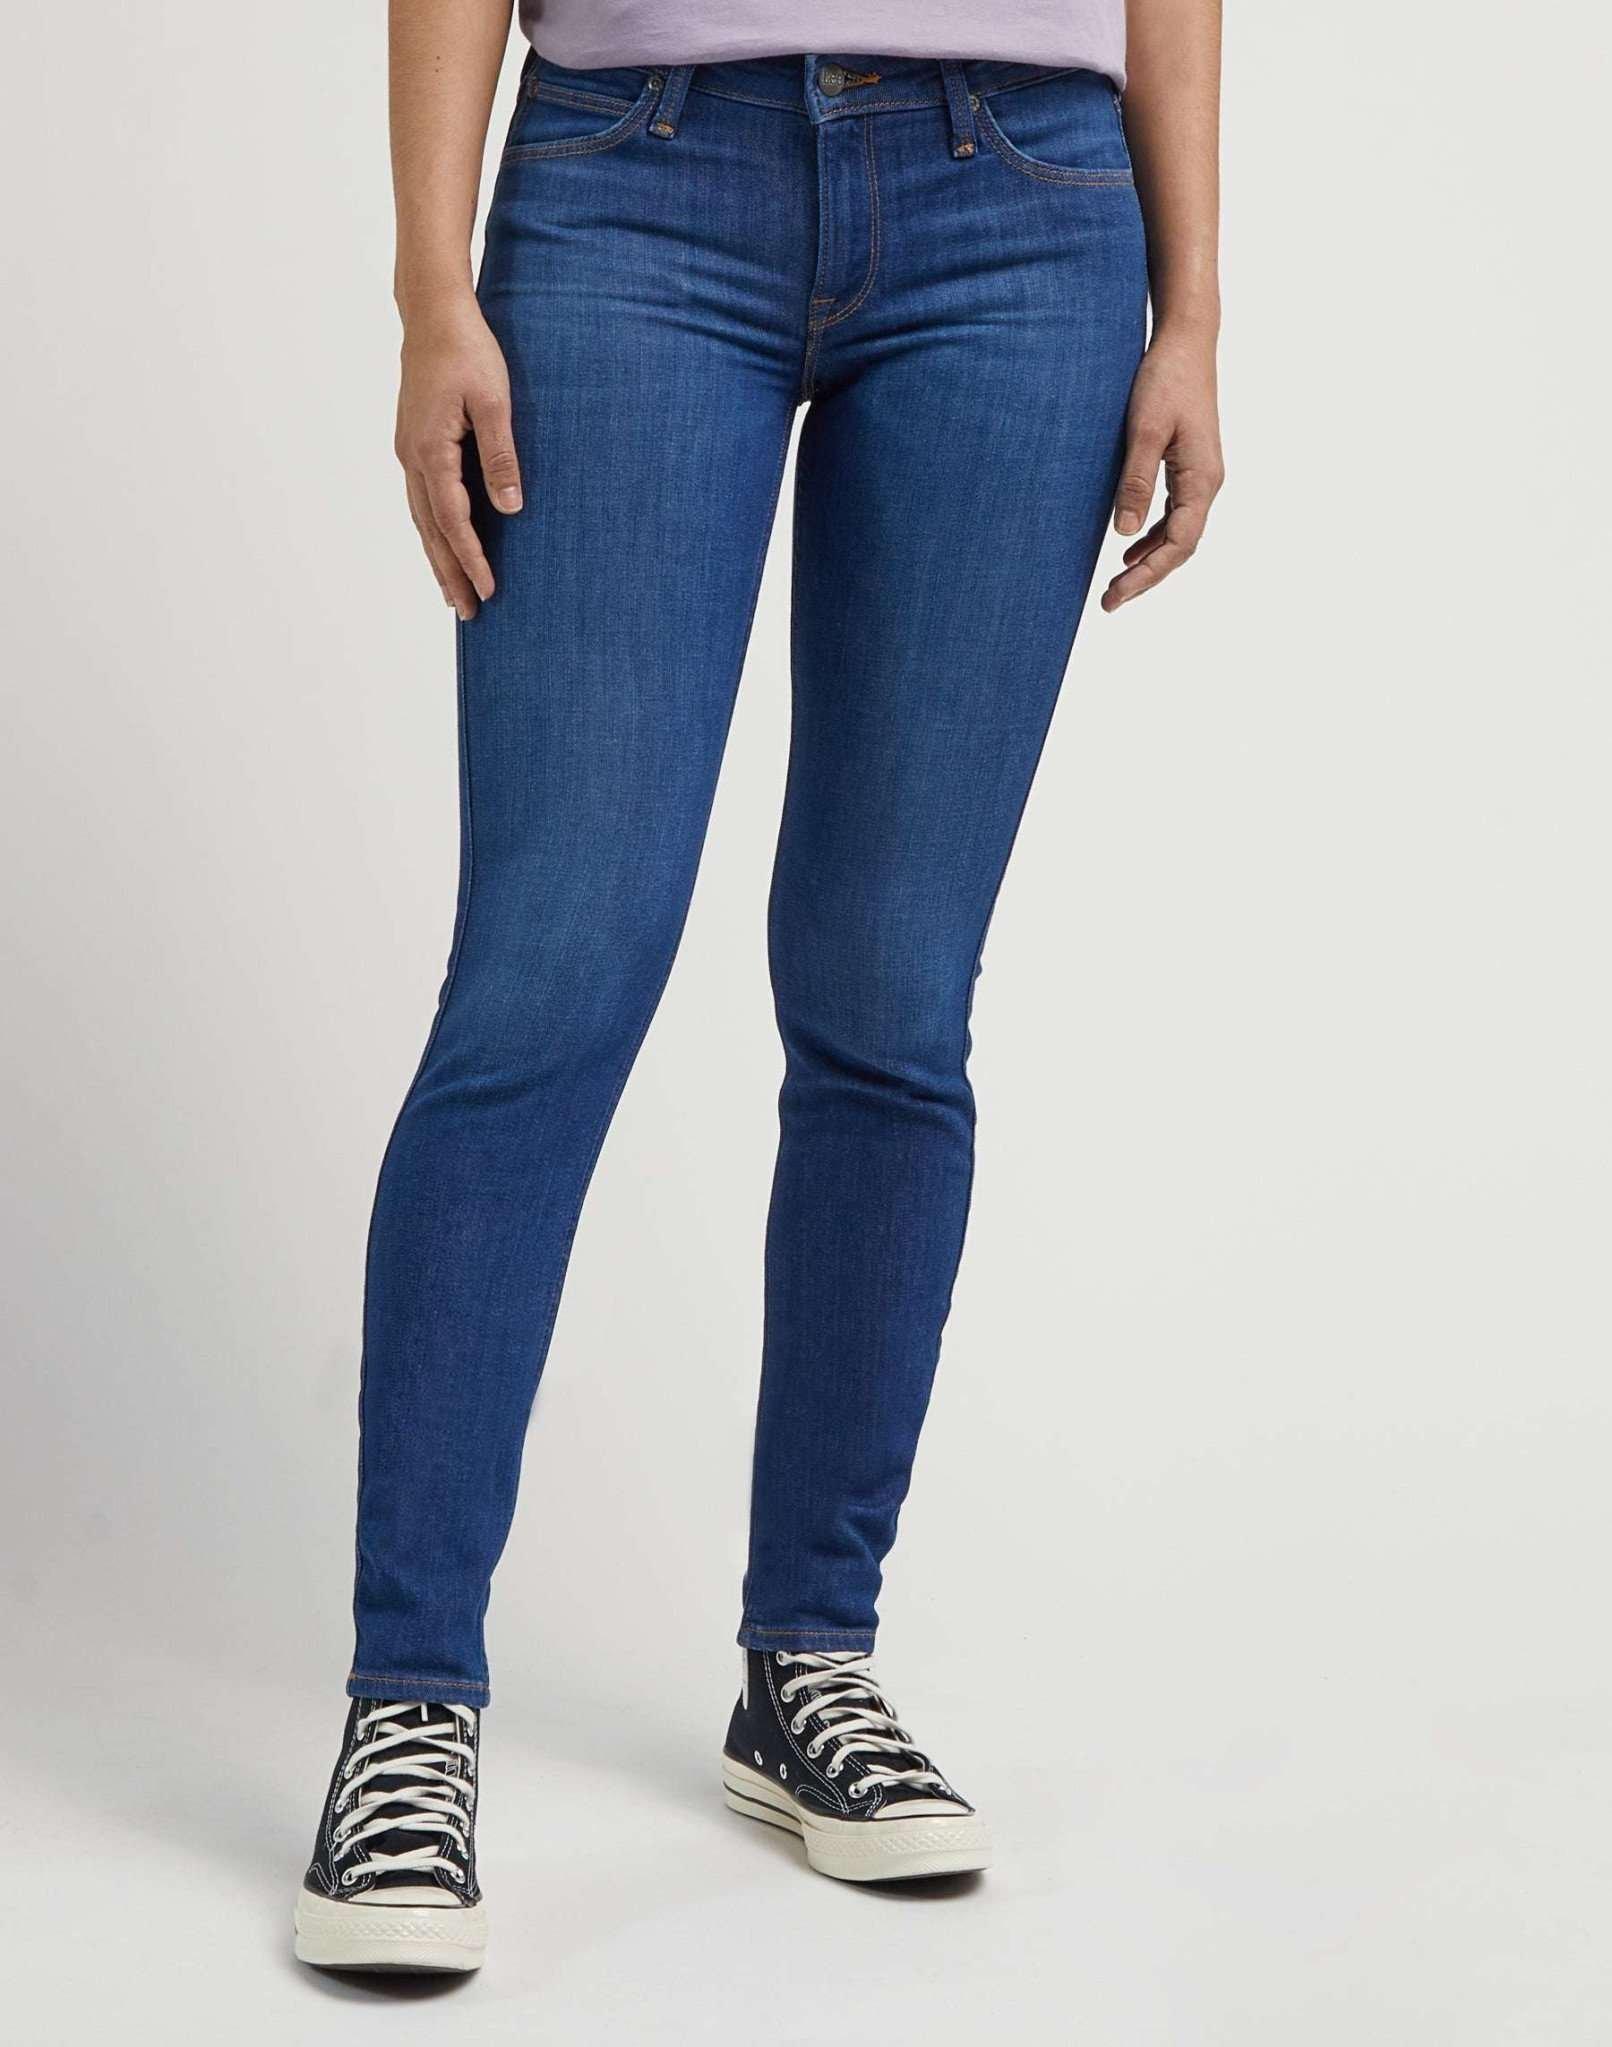 Jeans Skinny Fit Scarlett Damen Blau L31/W29 von Lee